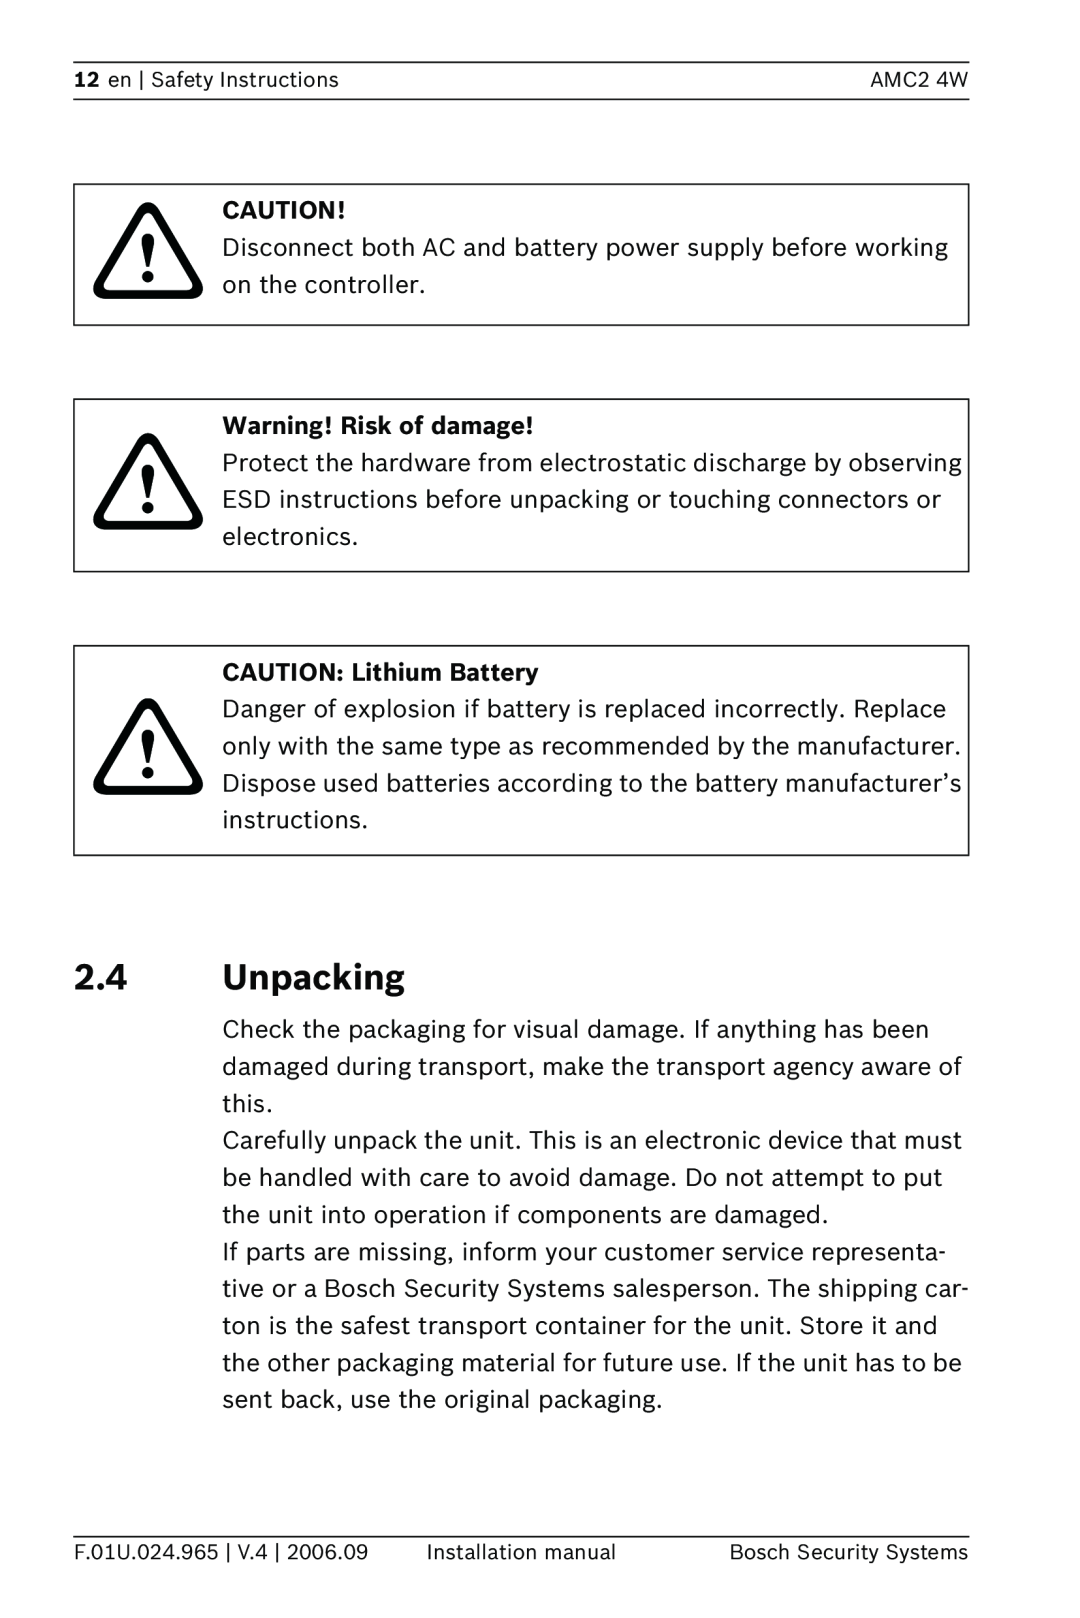 Bosch Appliances APC-AMC2-4WUS, APC-AMC2-4WCF Unpacking, Warning! Risk of damage, CAUTION Lithium Battery 